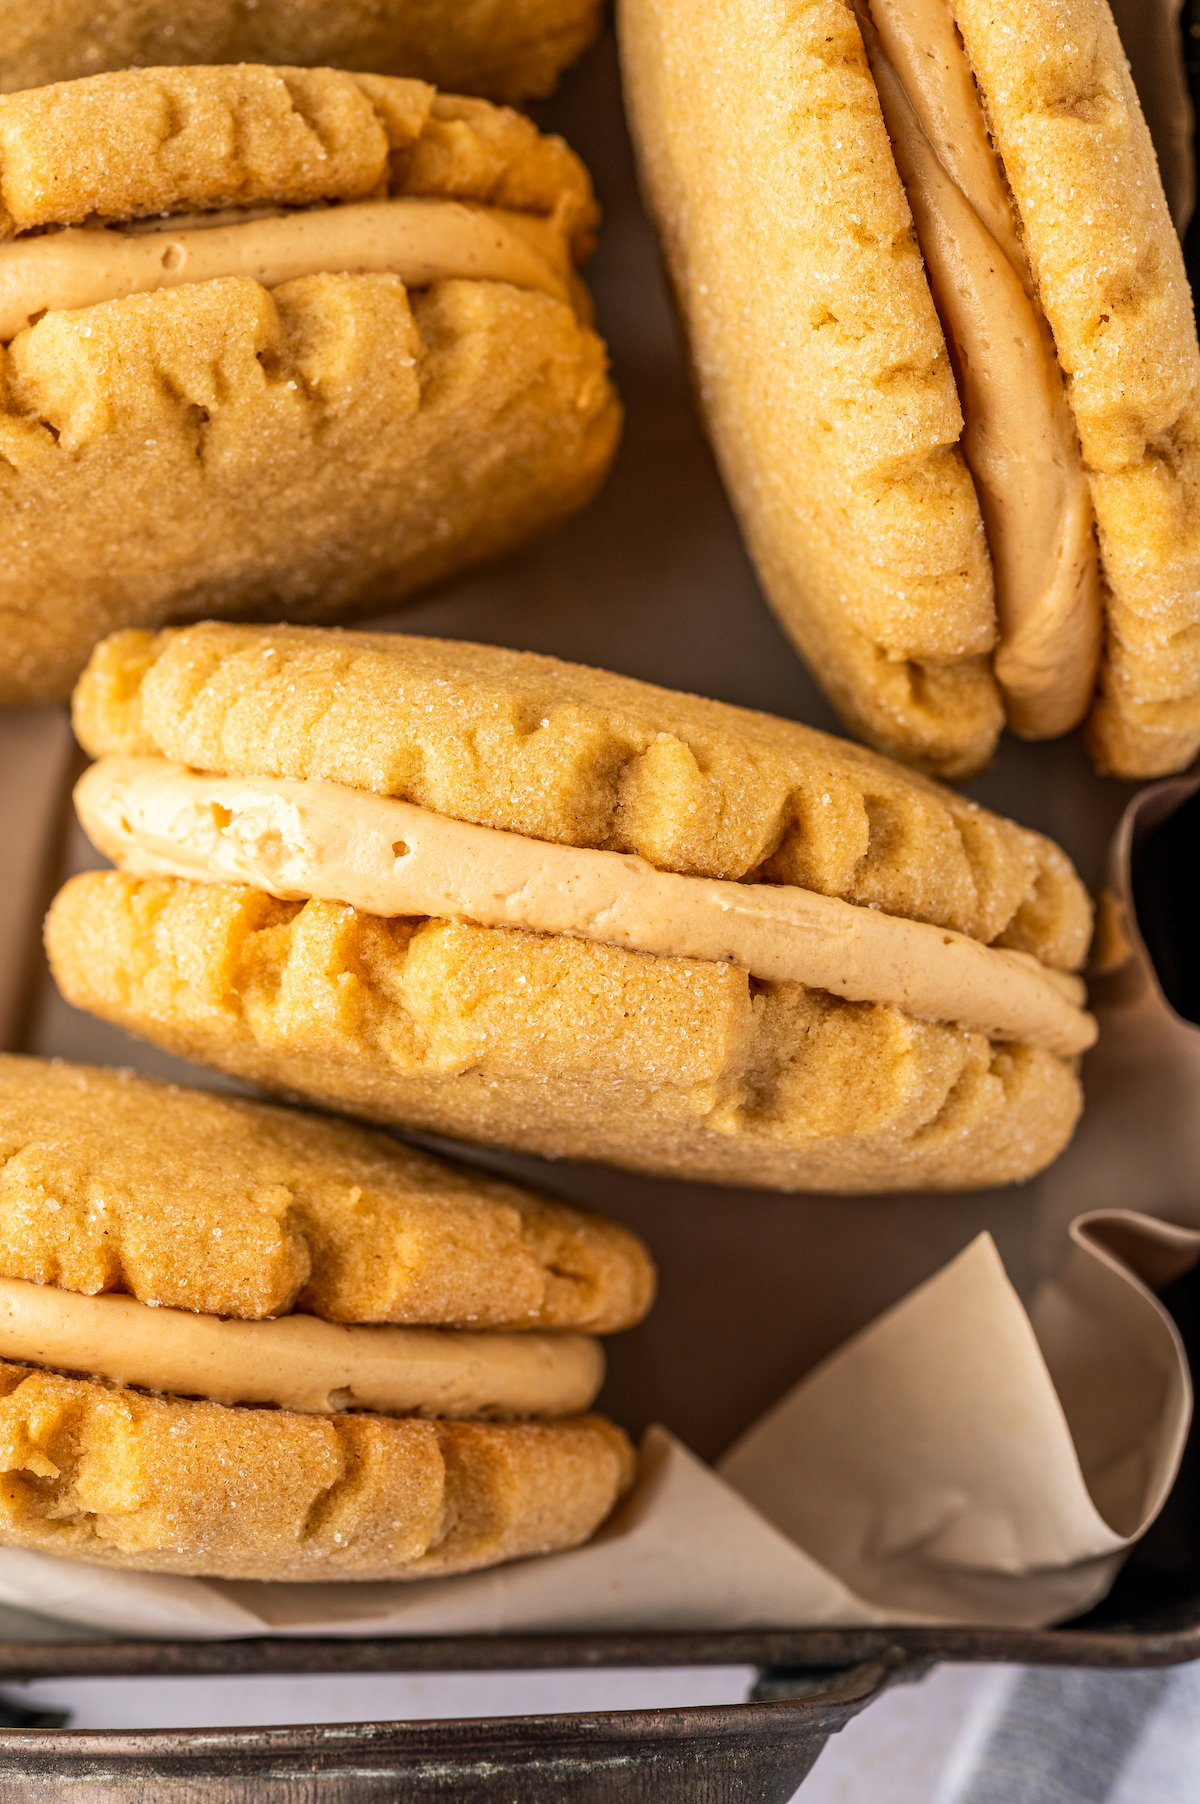 https://thenovicechefblog.com/wp-content/uploads/2011/12/Peanut-Butter-Sandwich-Cookies-1.jpeg